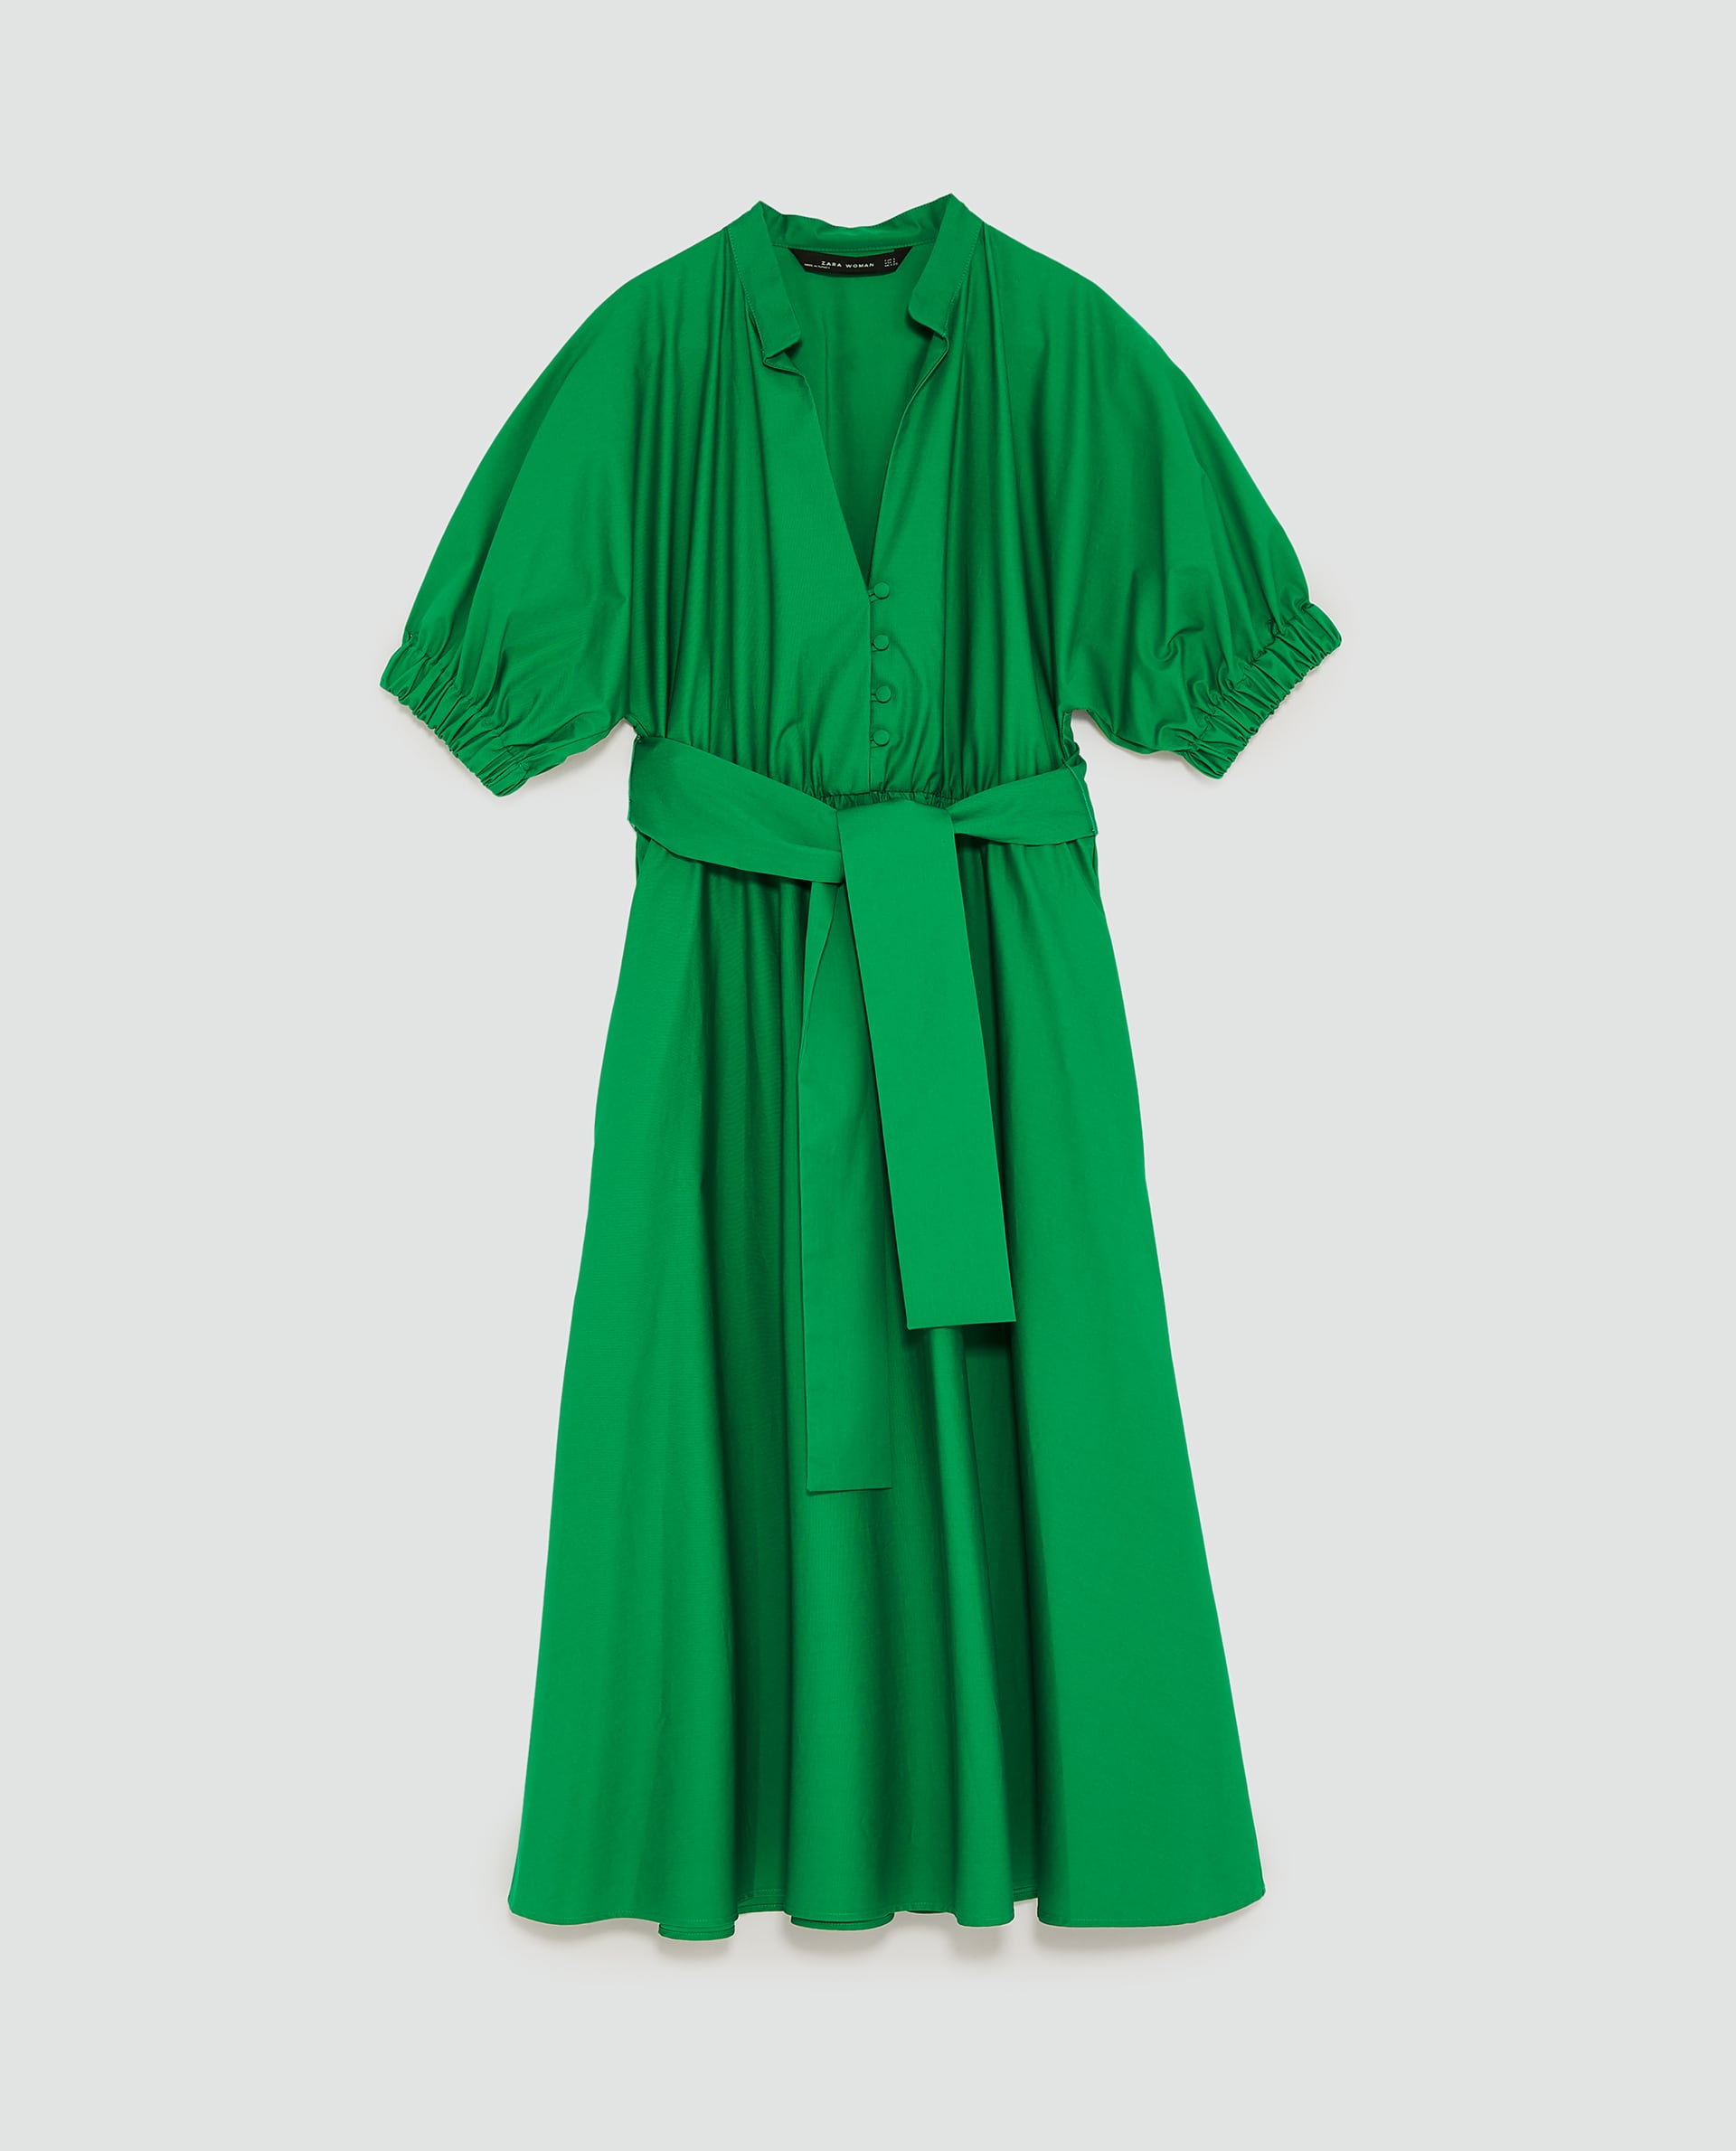 Zara Midi Dress with Voluminous Sleeves in Green.jpg